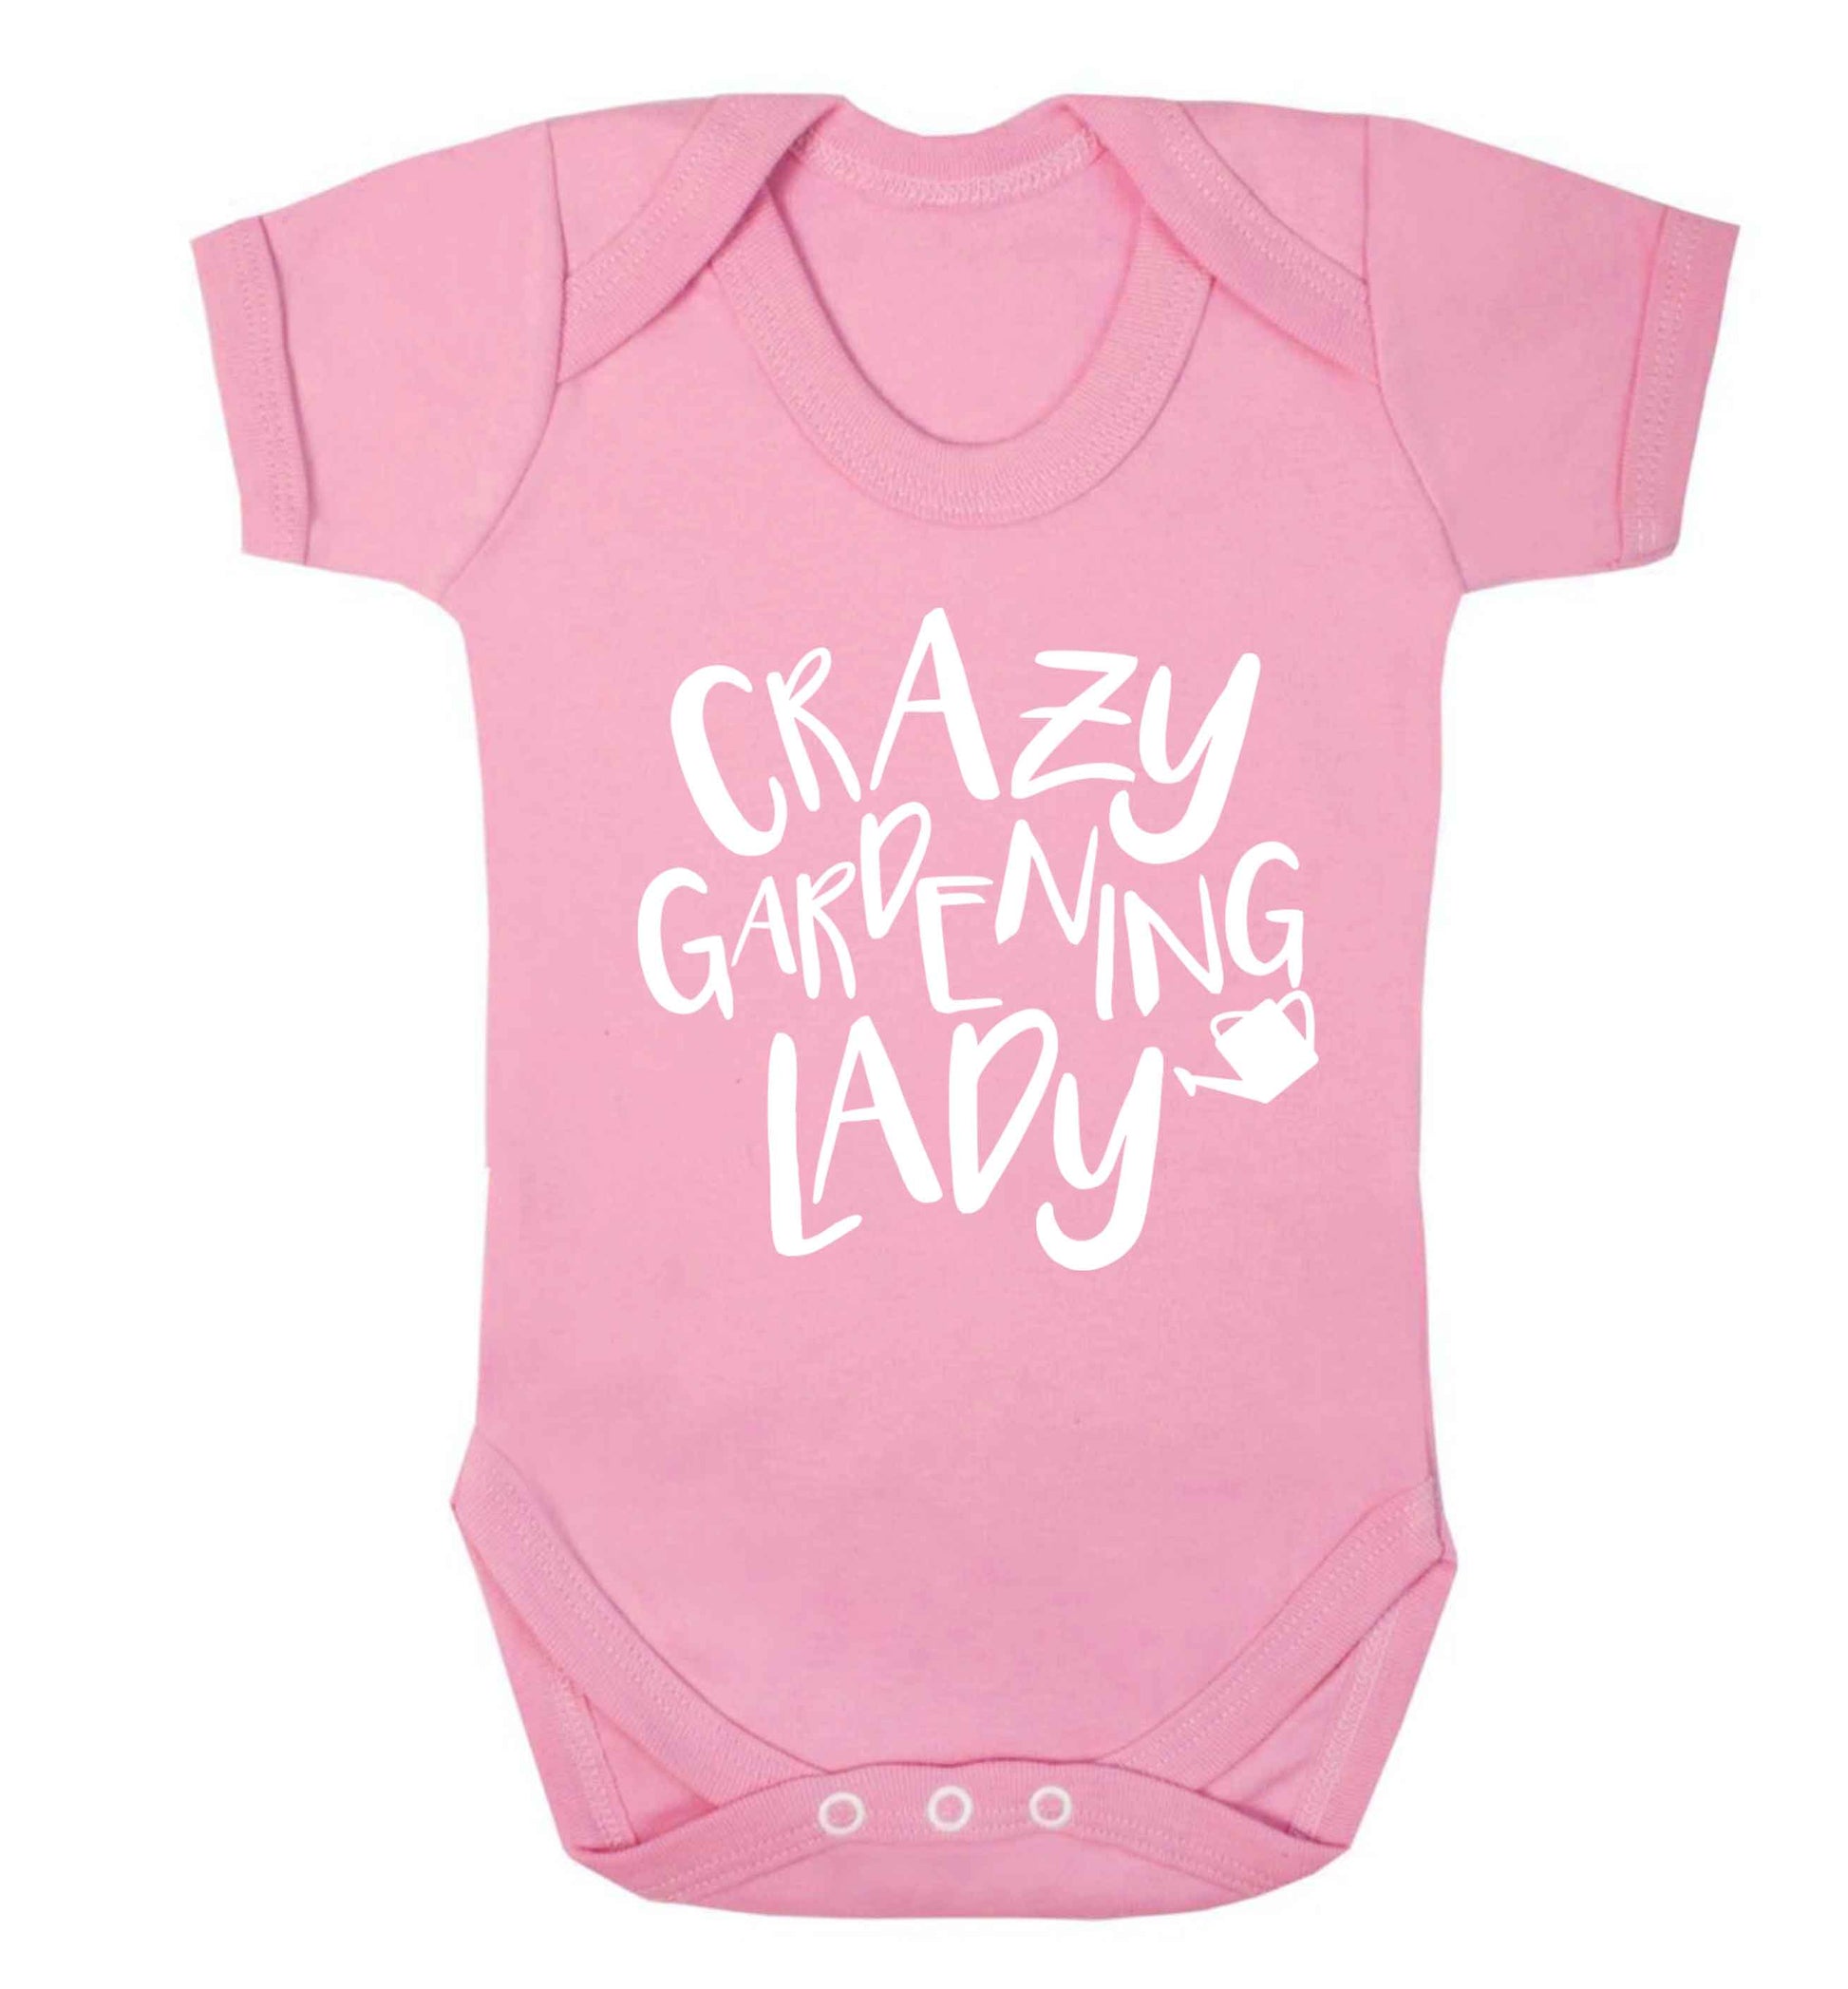 Crazy gardening lady Baby Vest pale pink 18-24 months